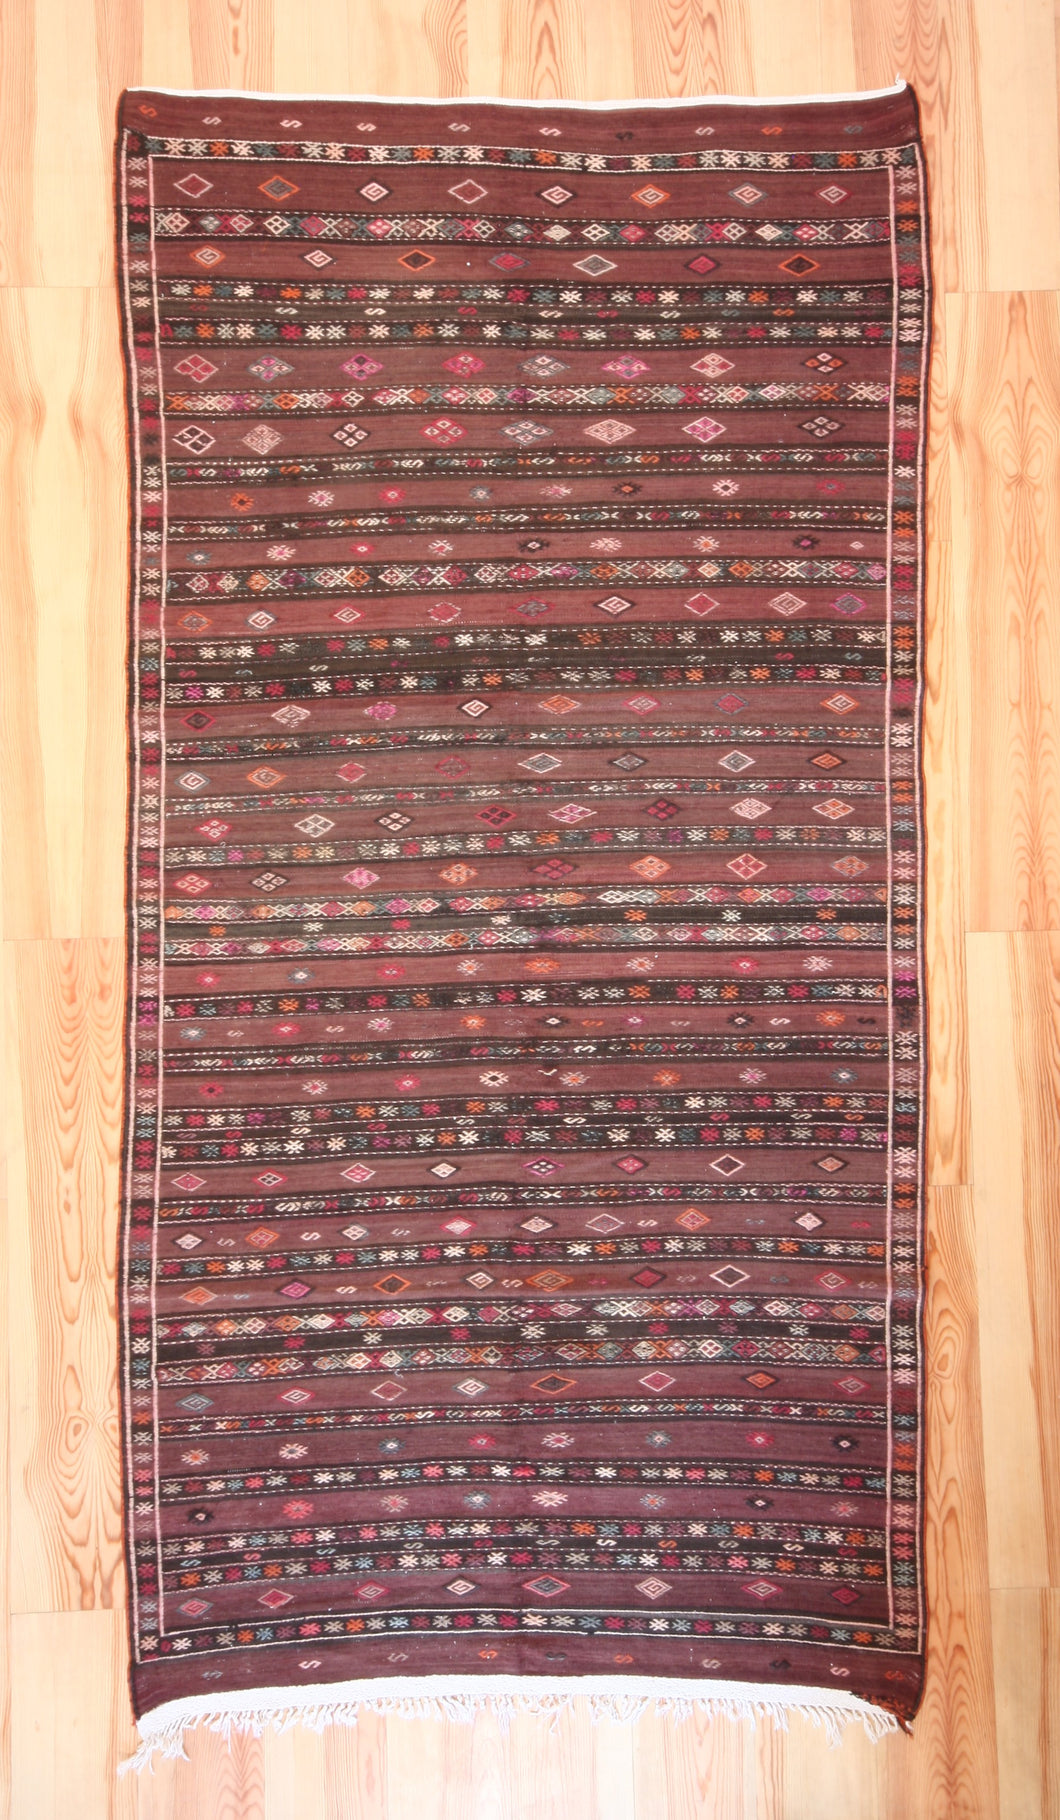 6x11 Vintage Anatolian Turkish Kilim Area Rug | Stripes with earthy colors and tribal symbols | SKU 456